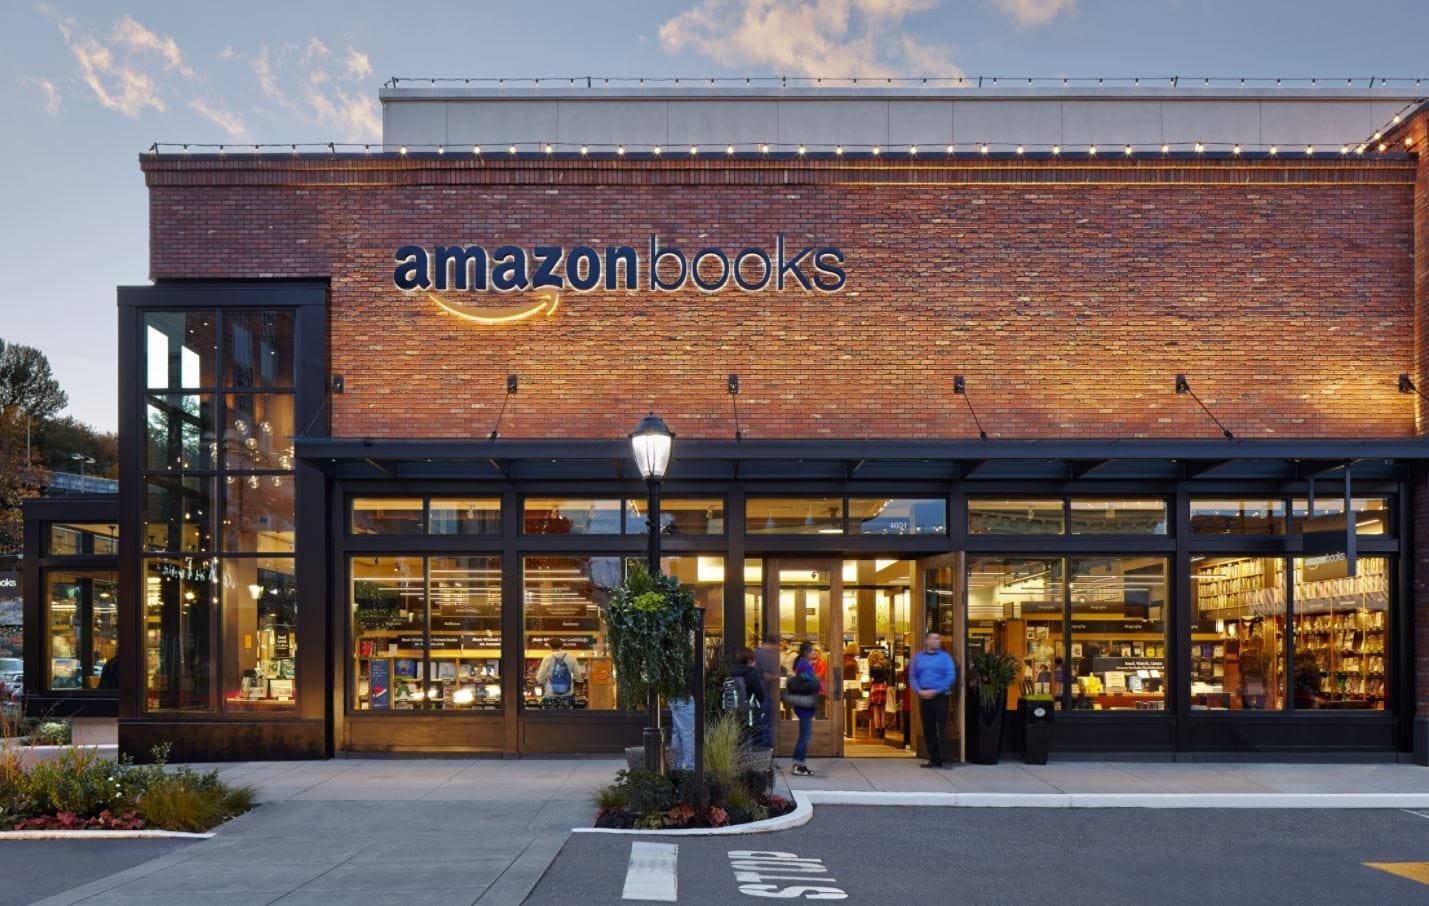 Amazon book store shop front